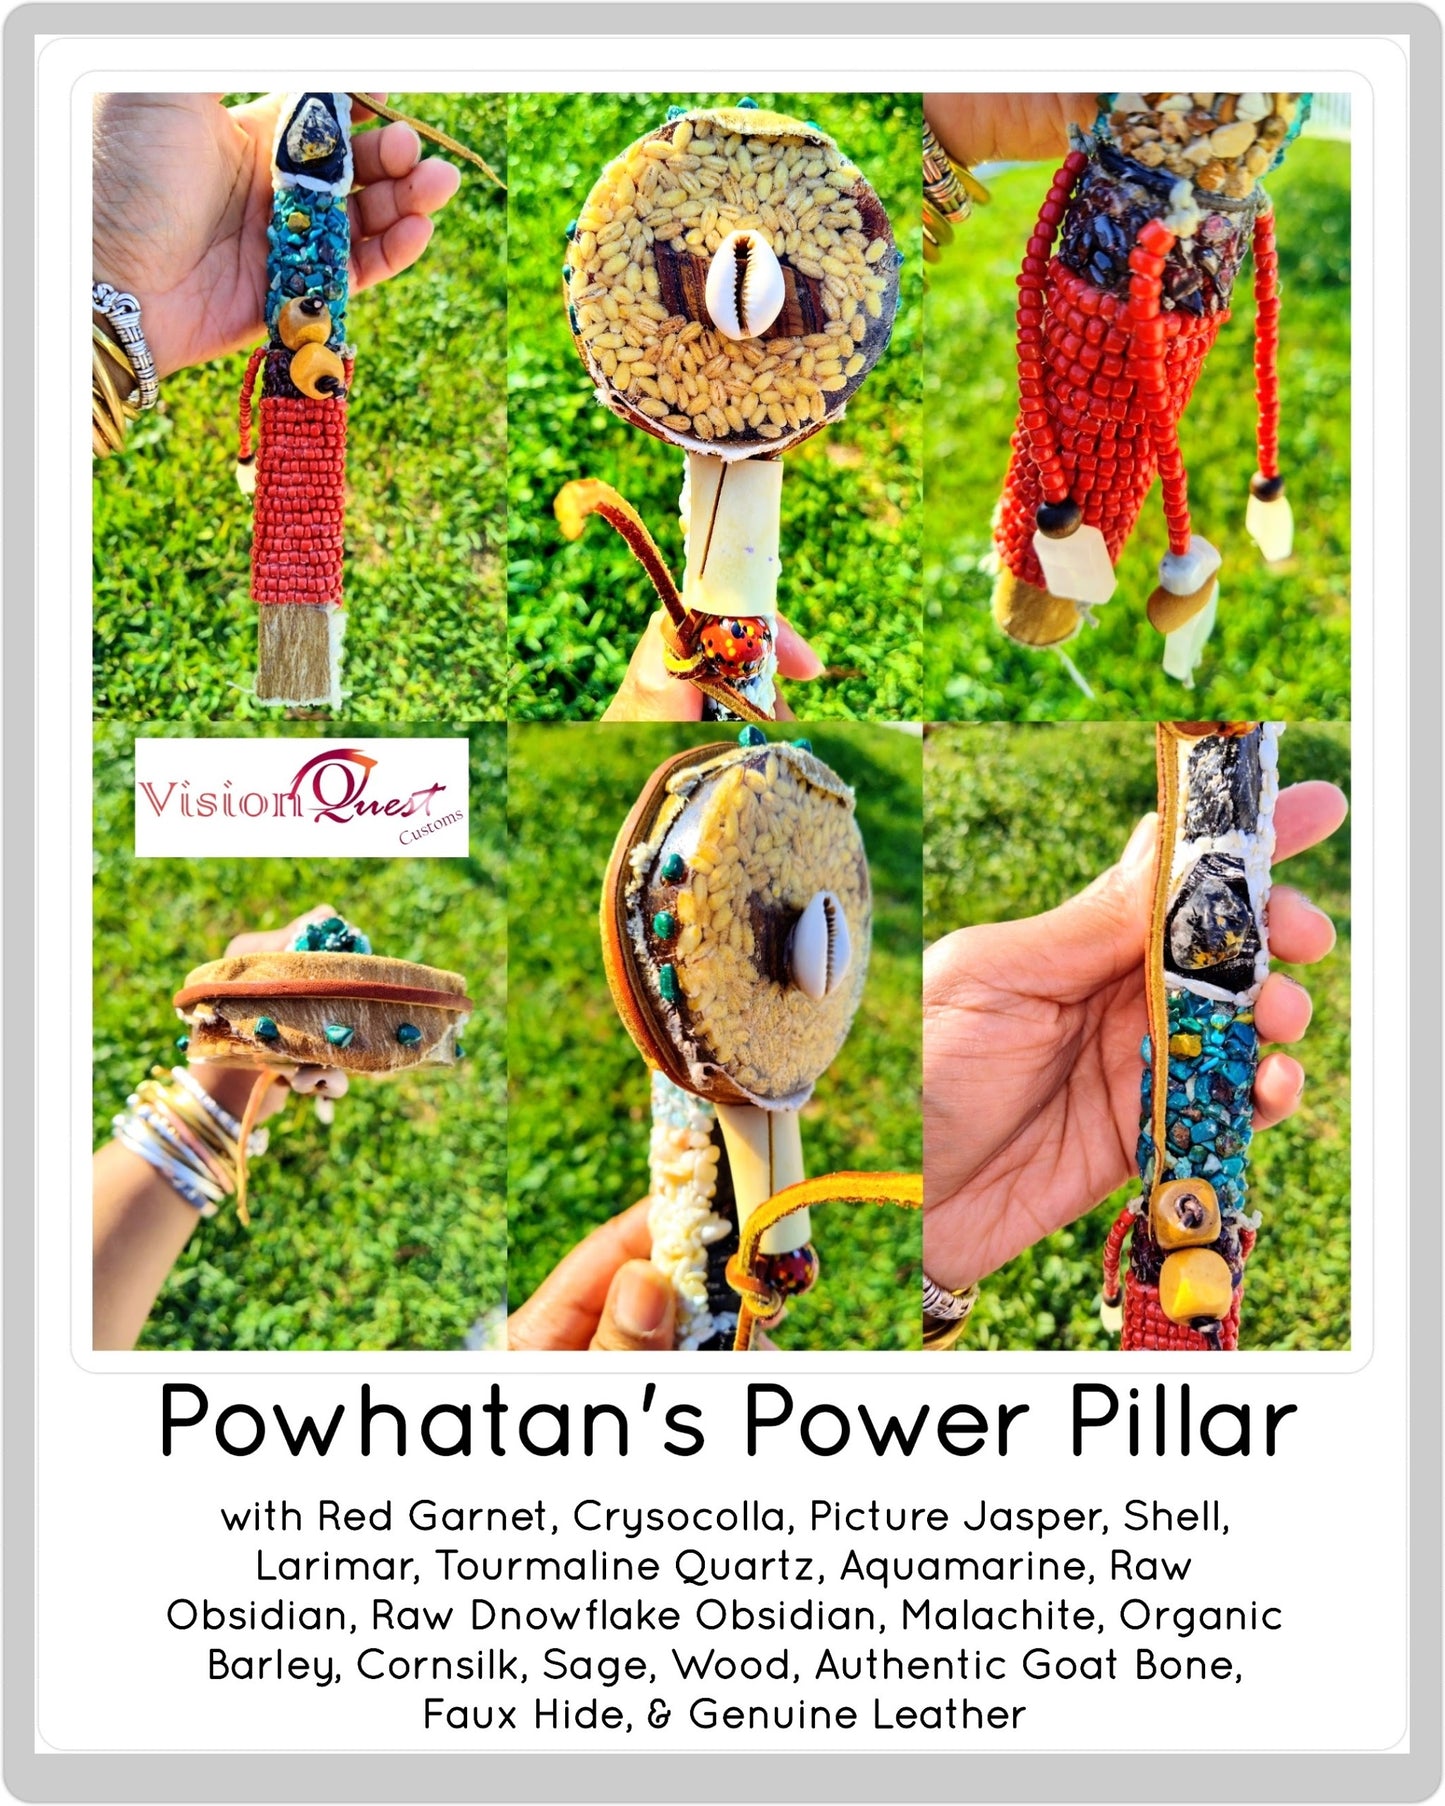 Powhatan's Power Pillar